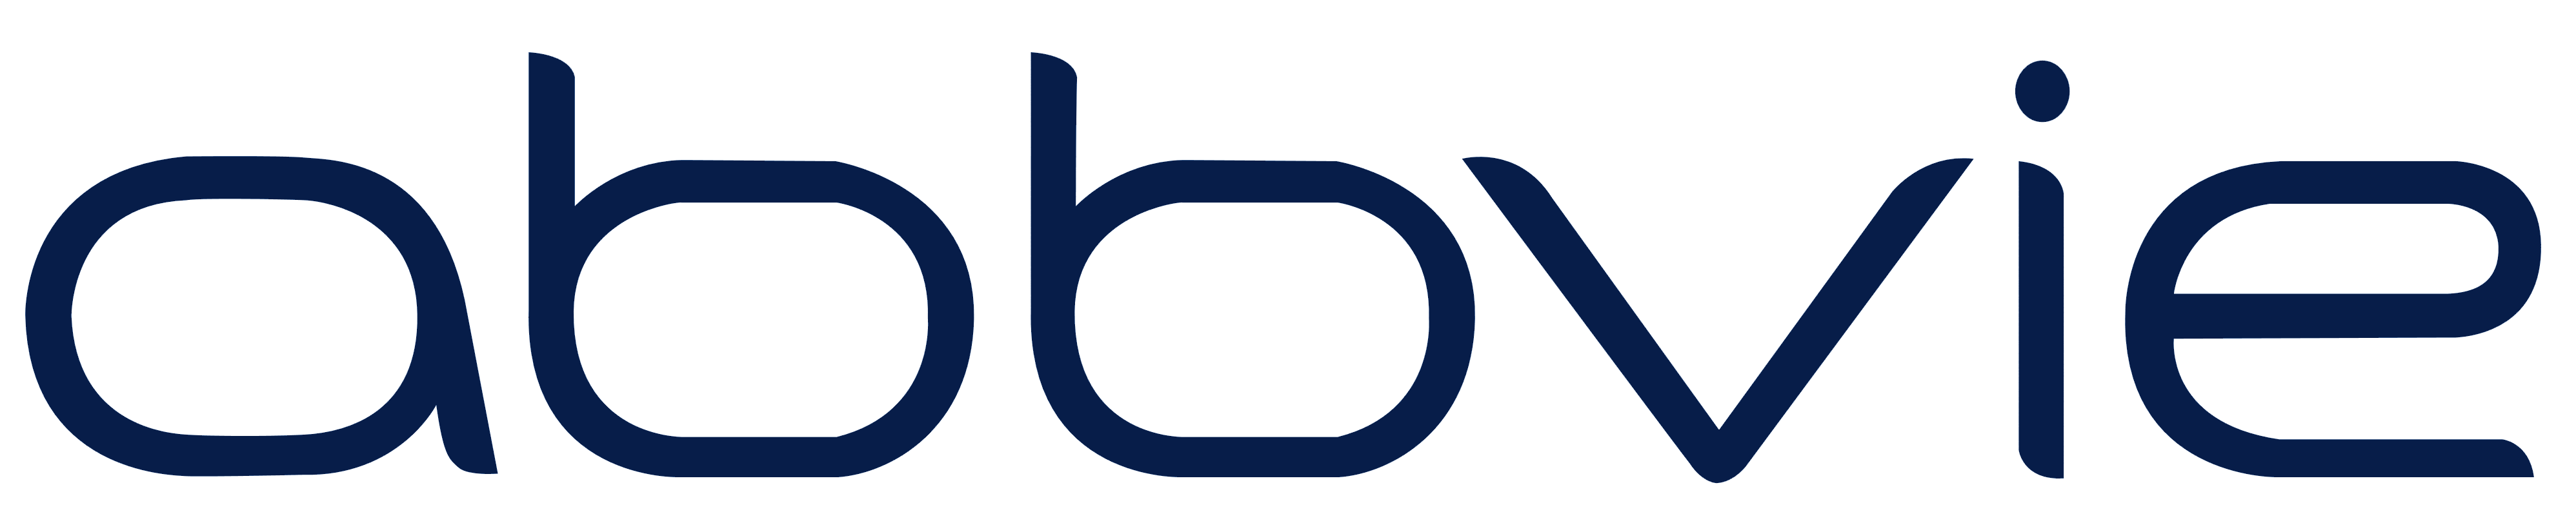 AbbVie_logo.png